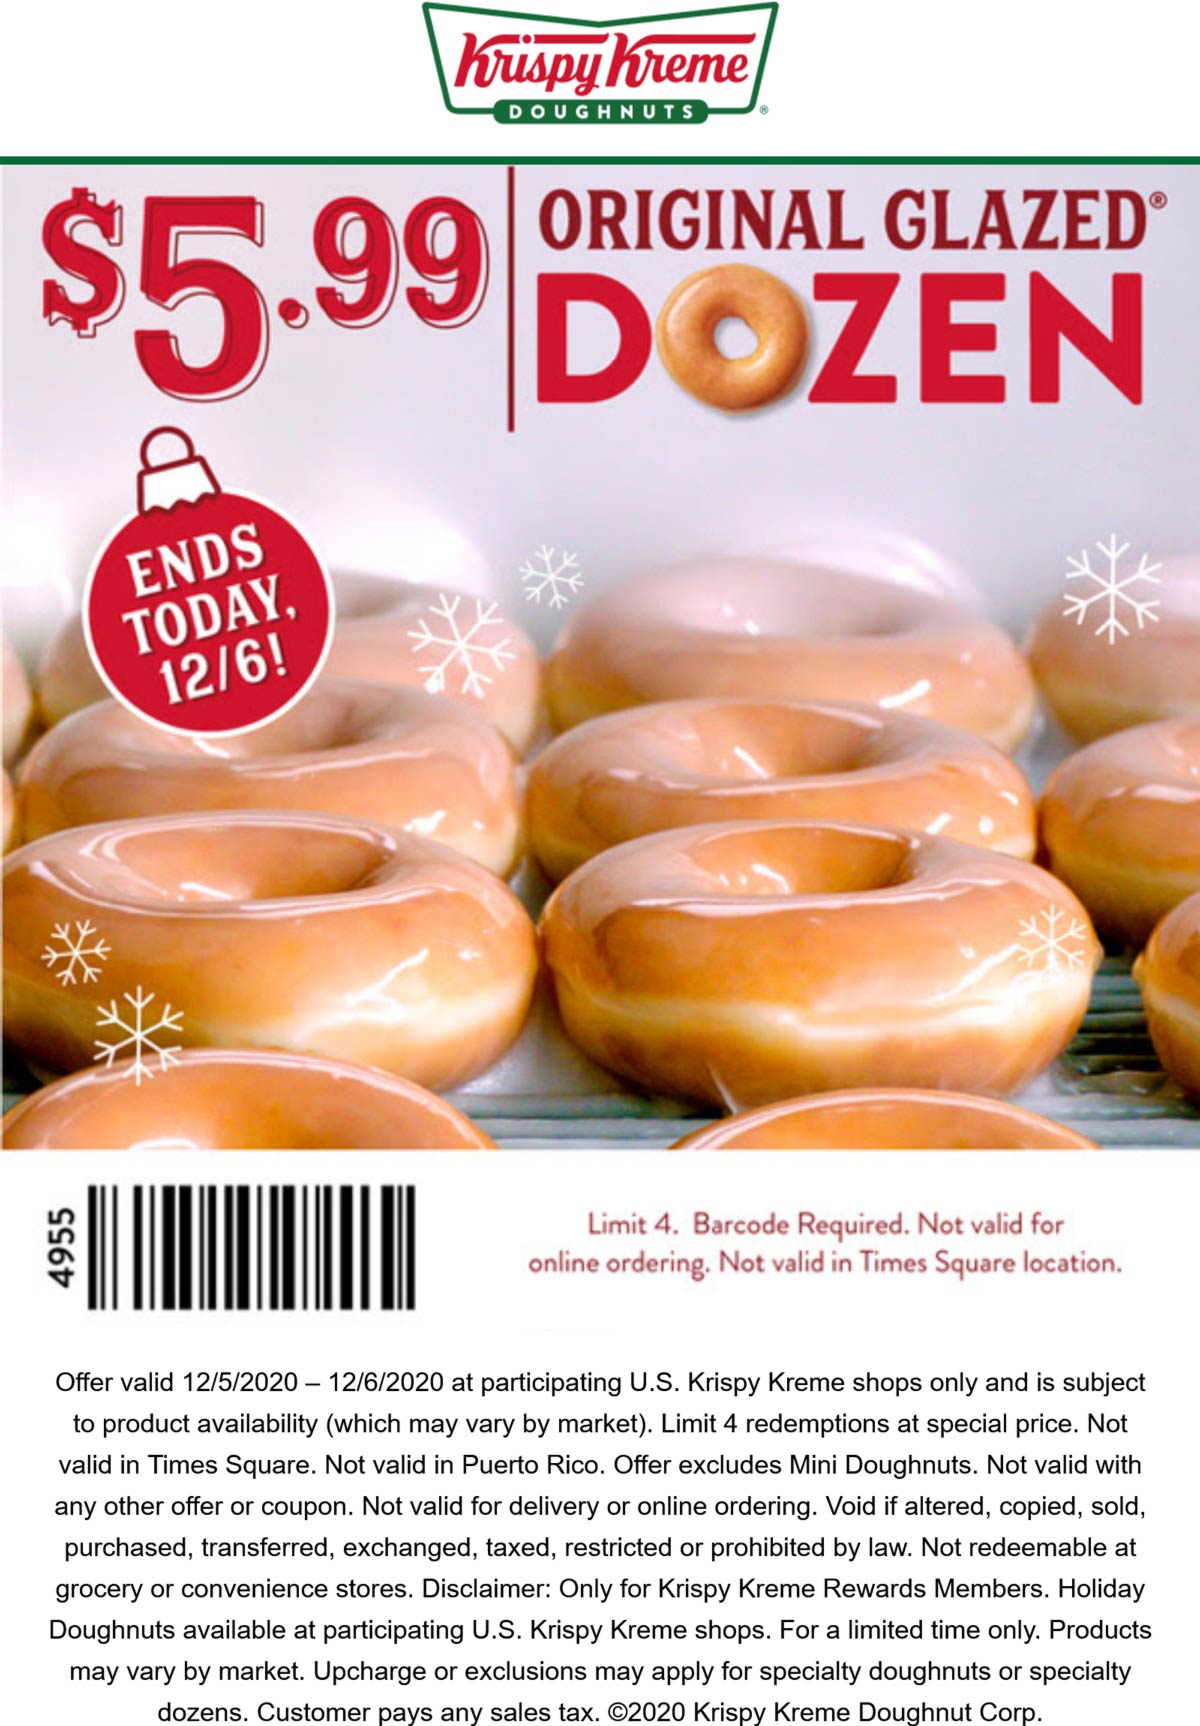 Krispy Kreme restaurants Coupon  $6 glazed dozens today at Krispy Kreme doughnuts #krispykreme 